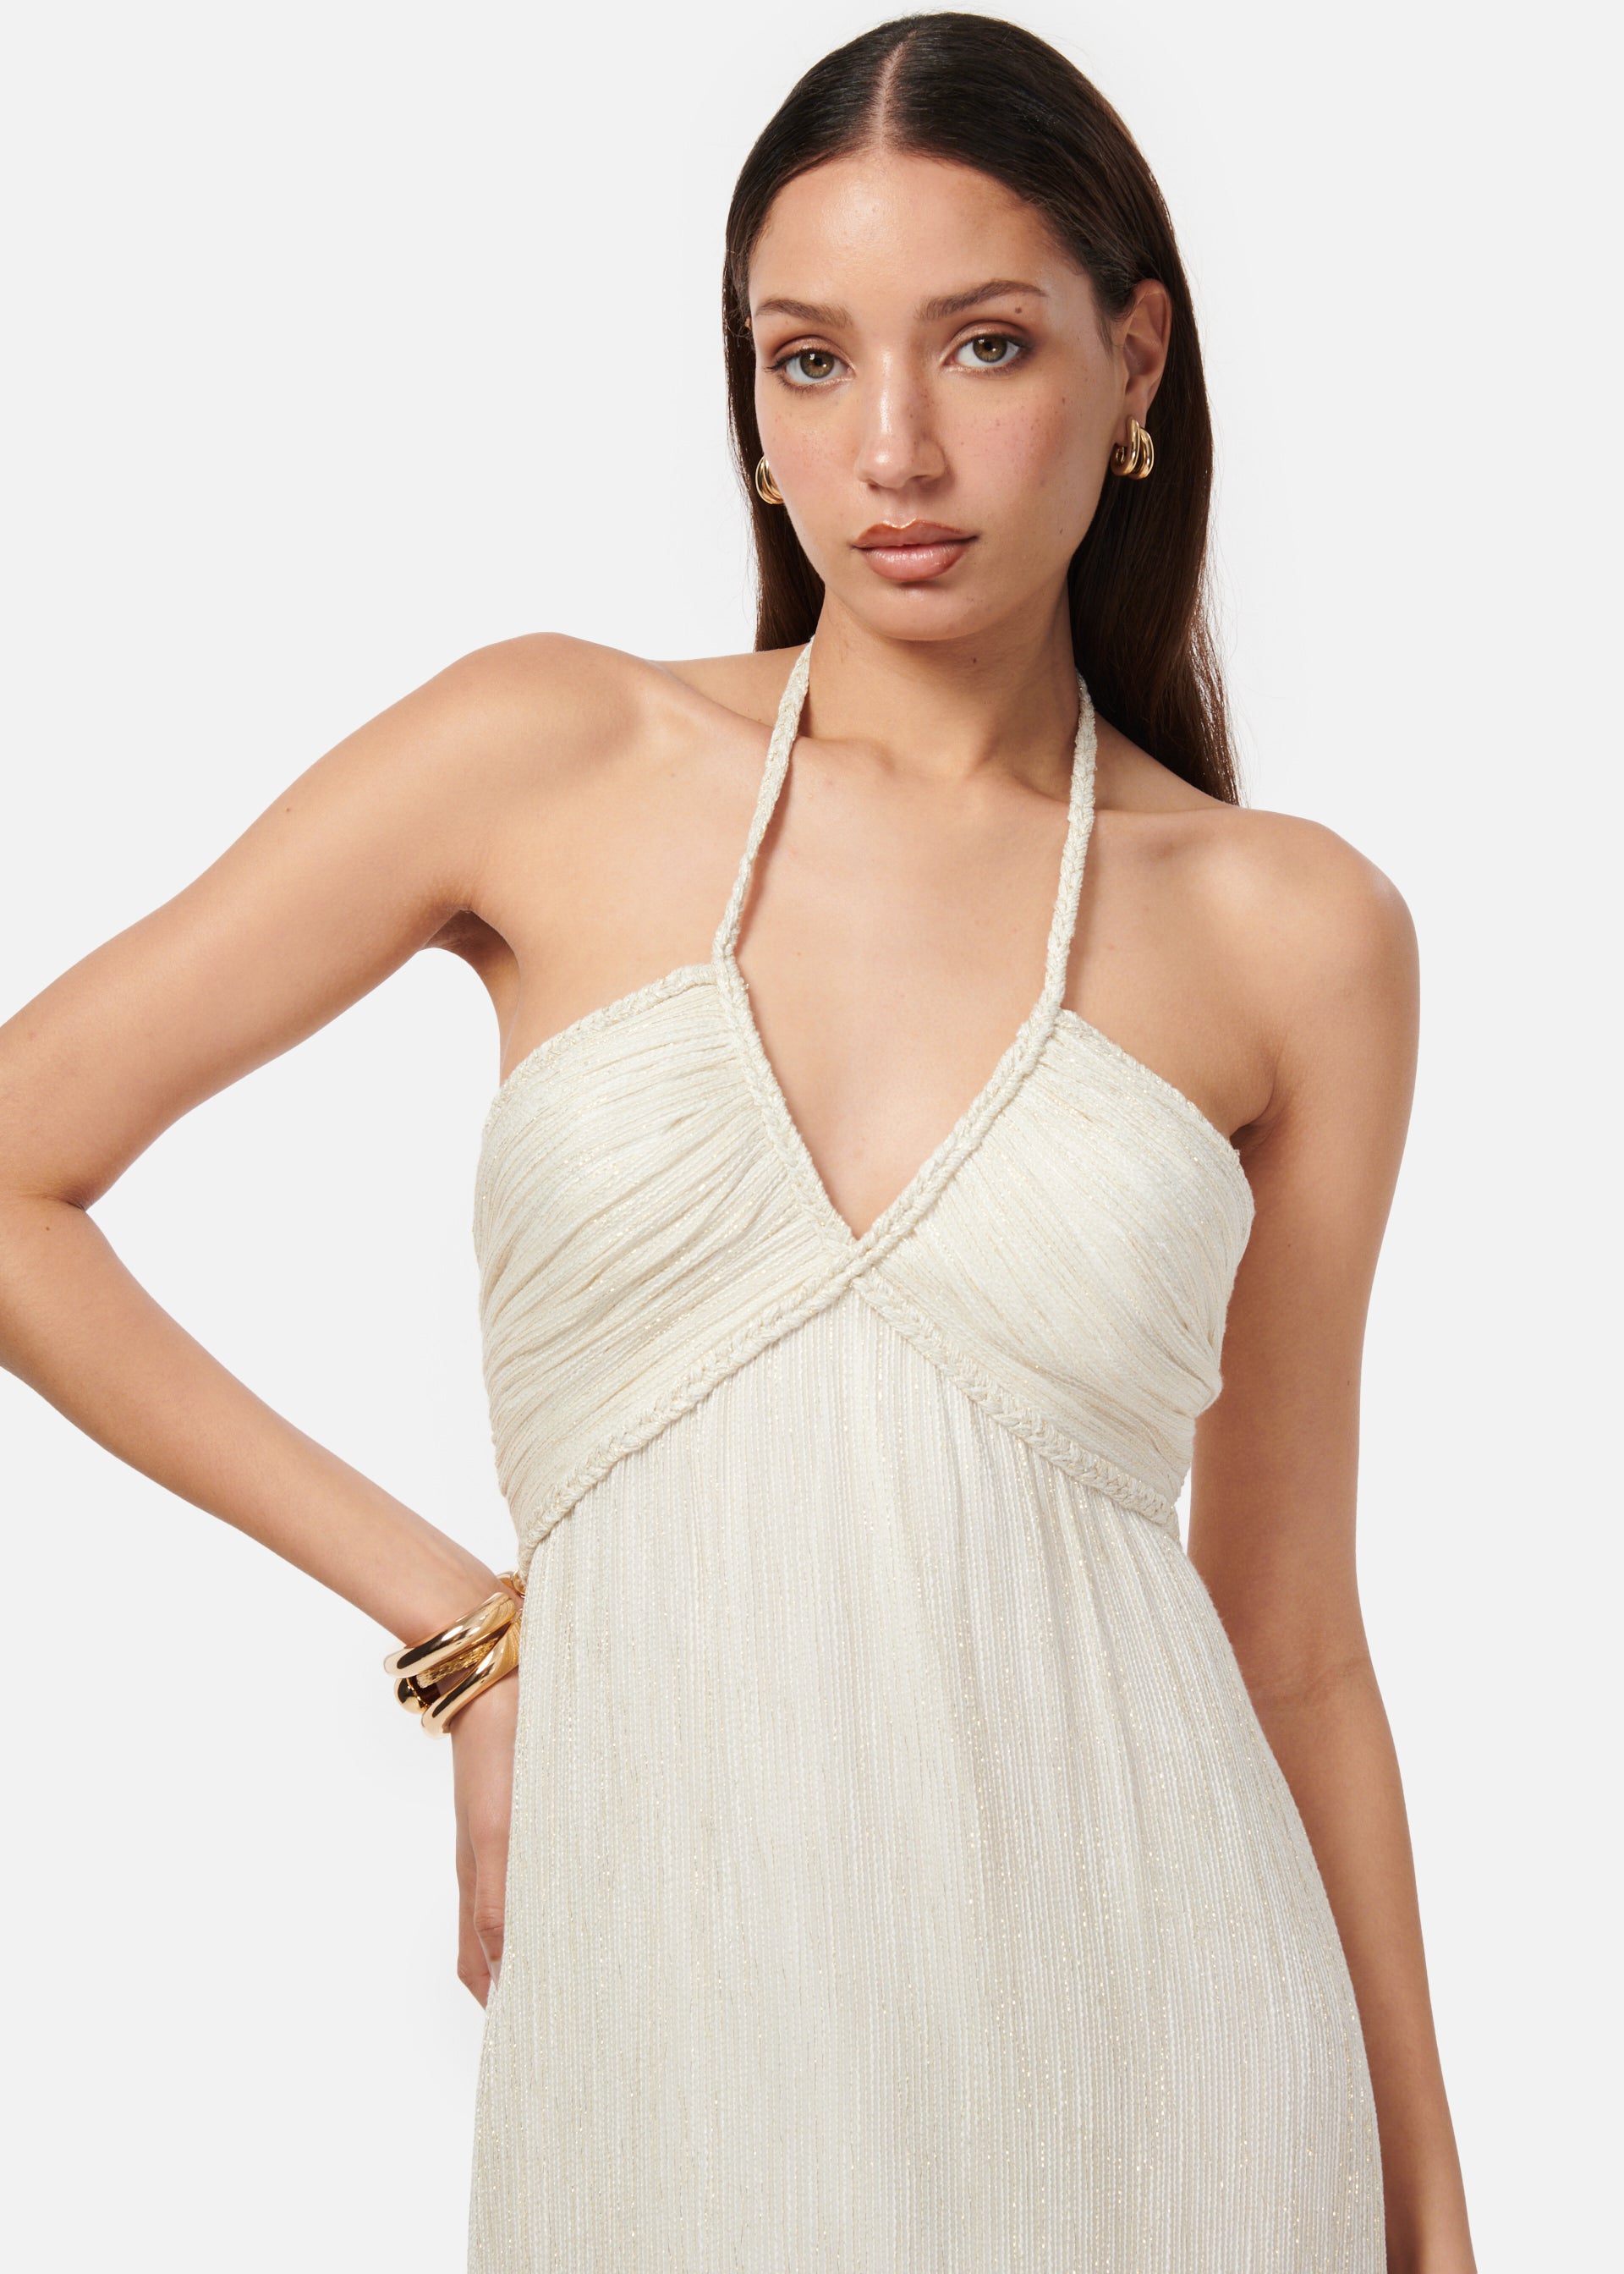 Sonoma Metallic Chiffon Dress White